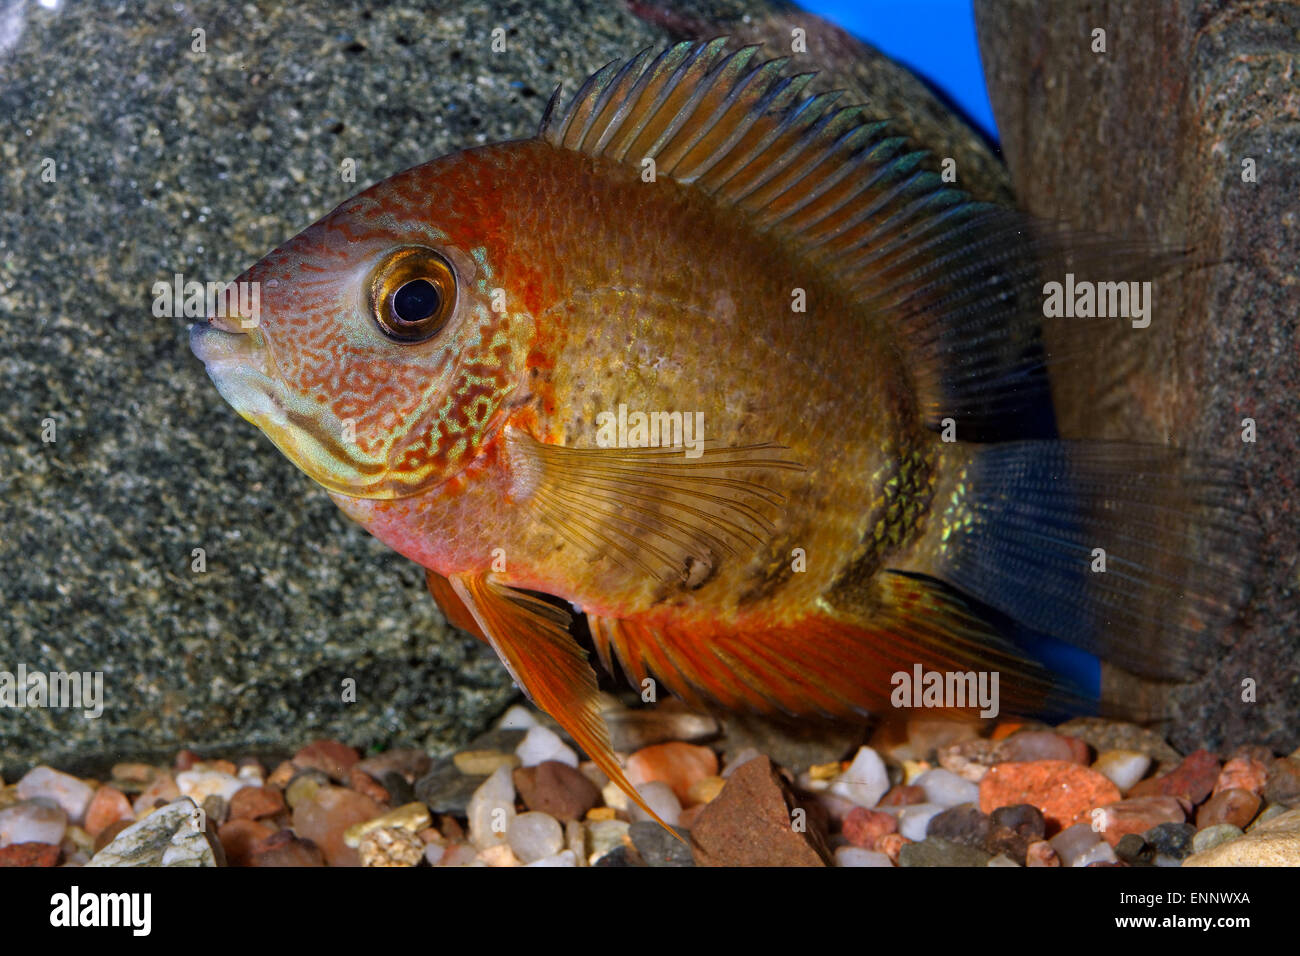 Nice brown cichlid fish from genus Heros. Stock Photo